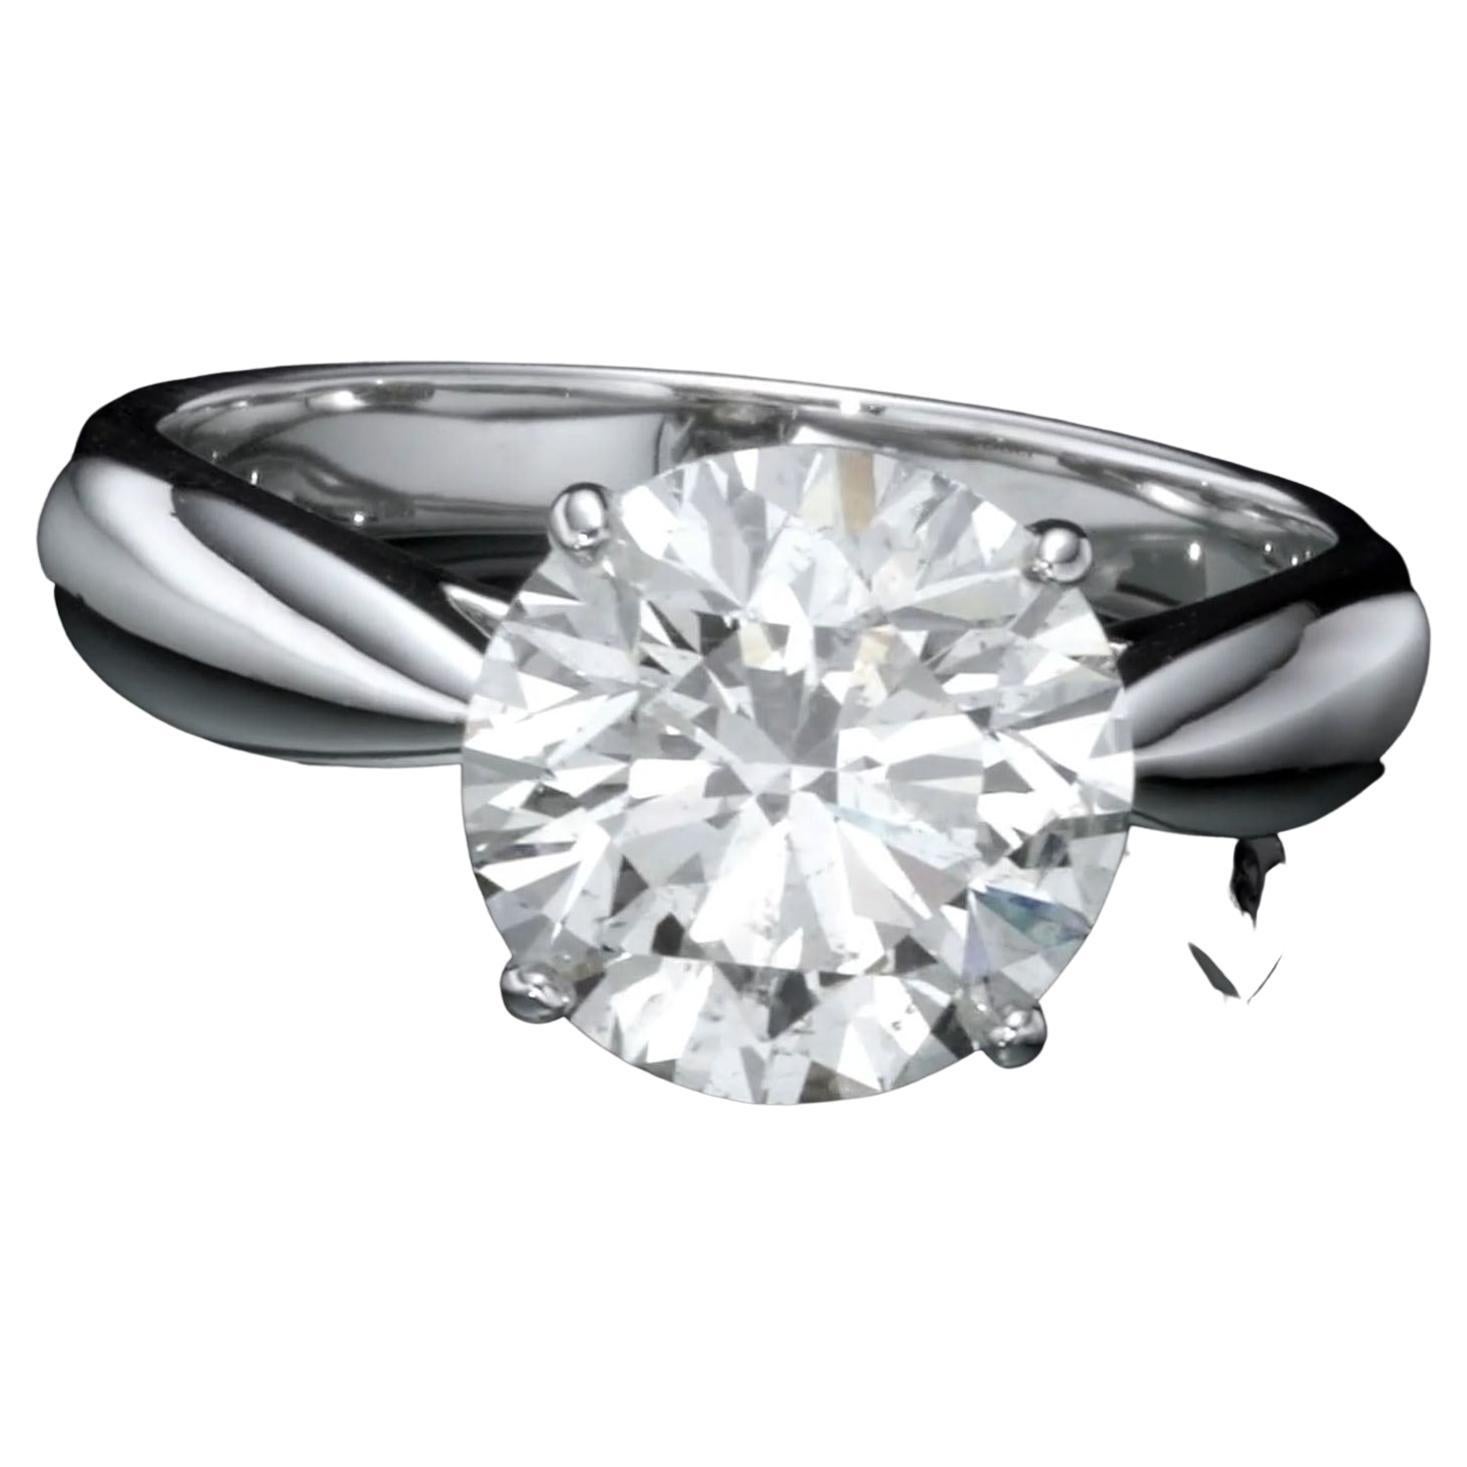 3.58 carat natural diamond engagement ring